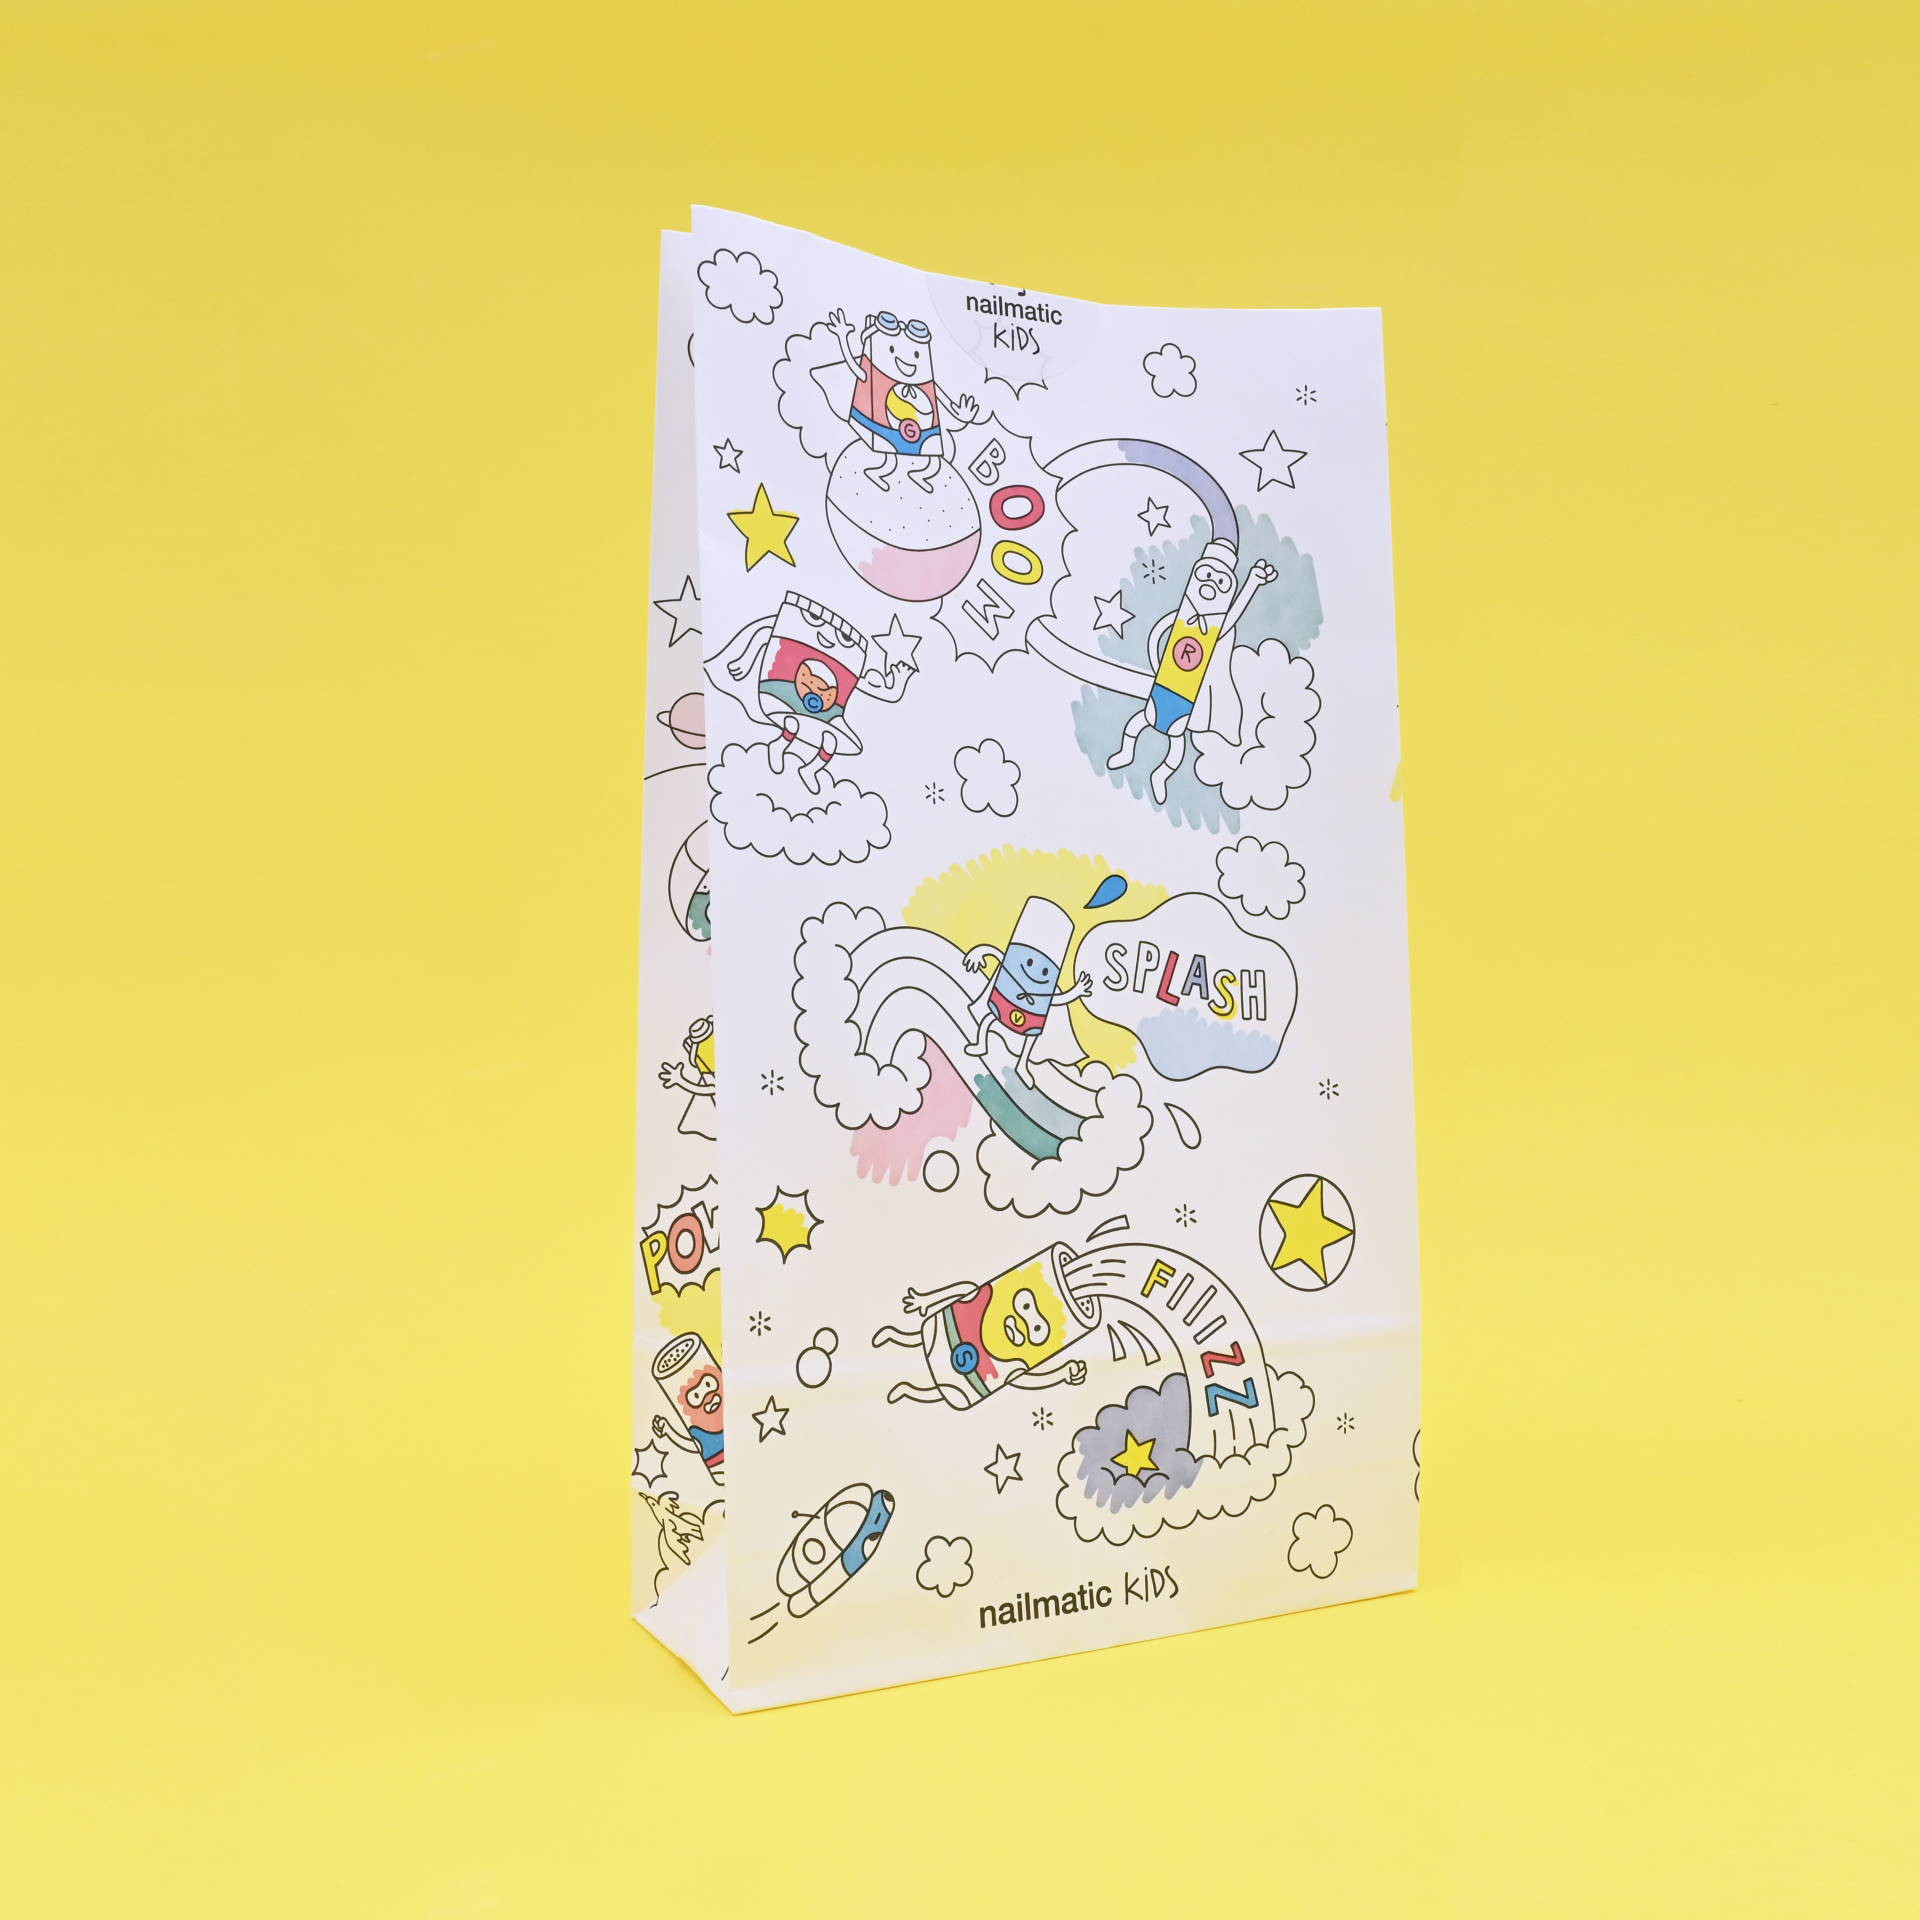 pochette cadeau réutilisable medium emballage cadeau format moyen nailmatic kids